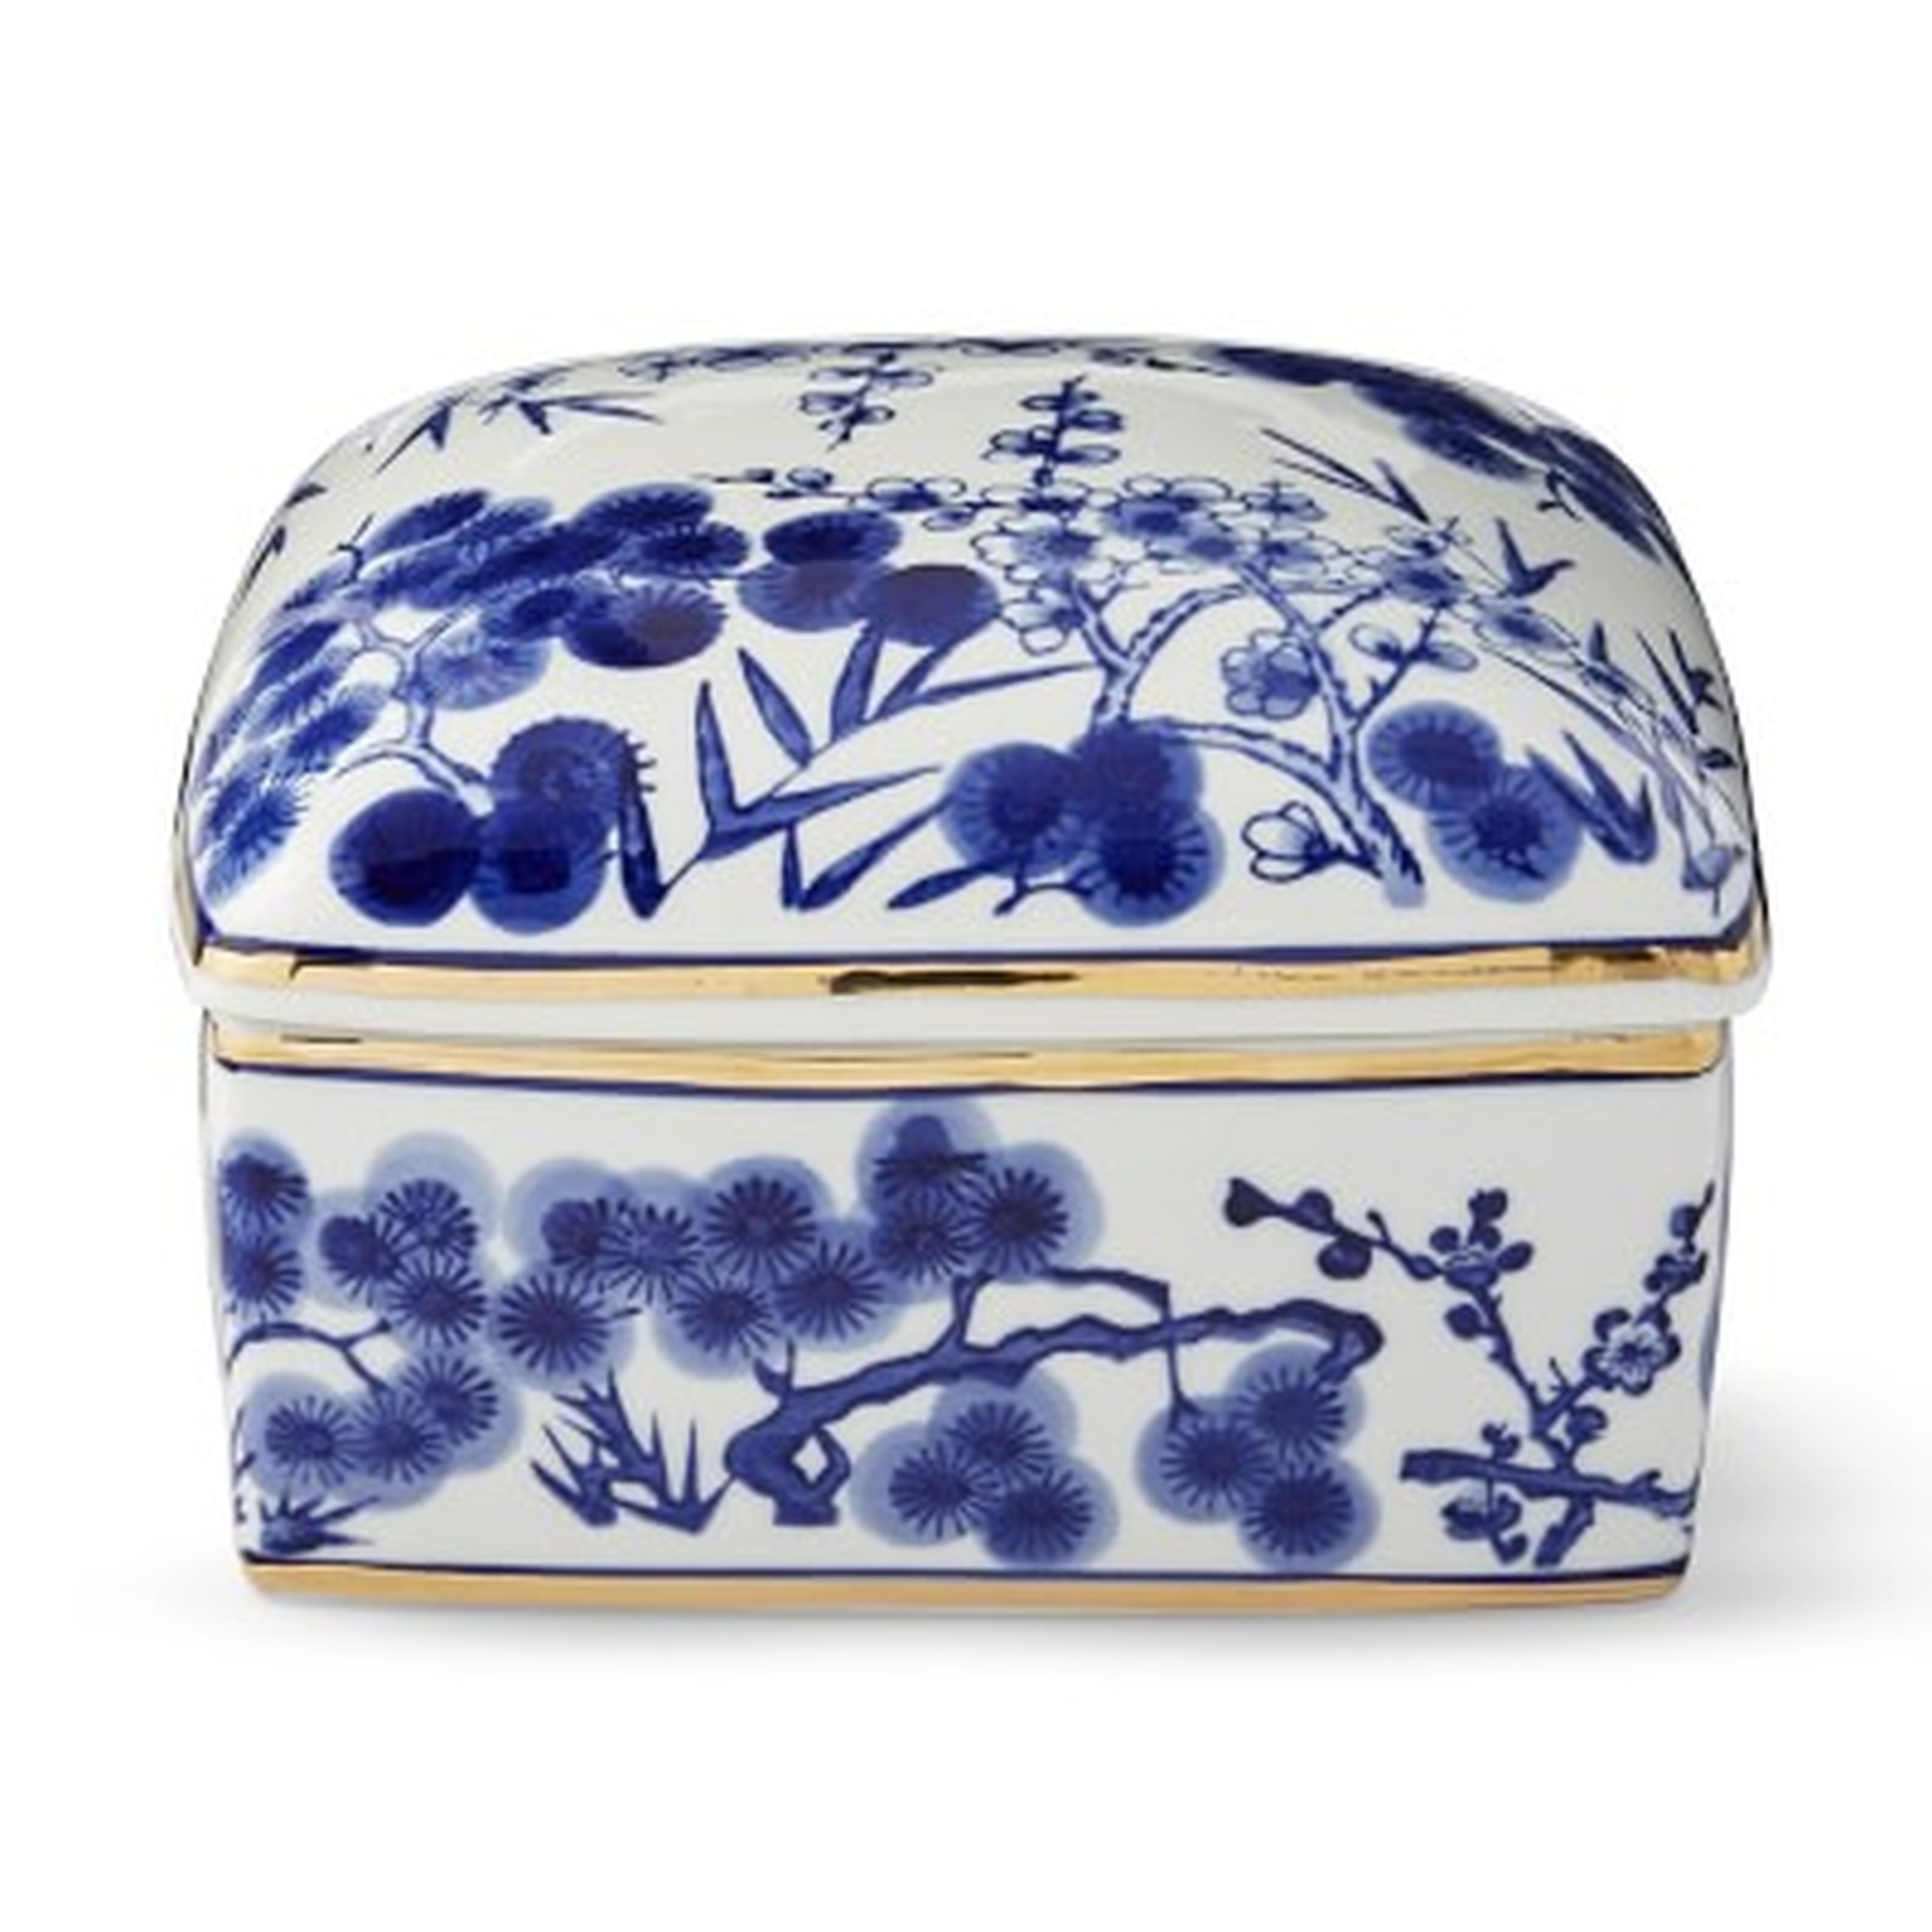 Chinoiserie Ceramic Jewelry Box, Bamboo Motif, Square, Blue and White - Williams Sonoma